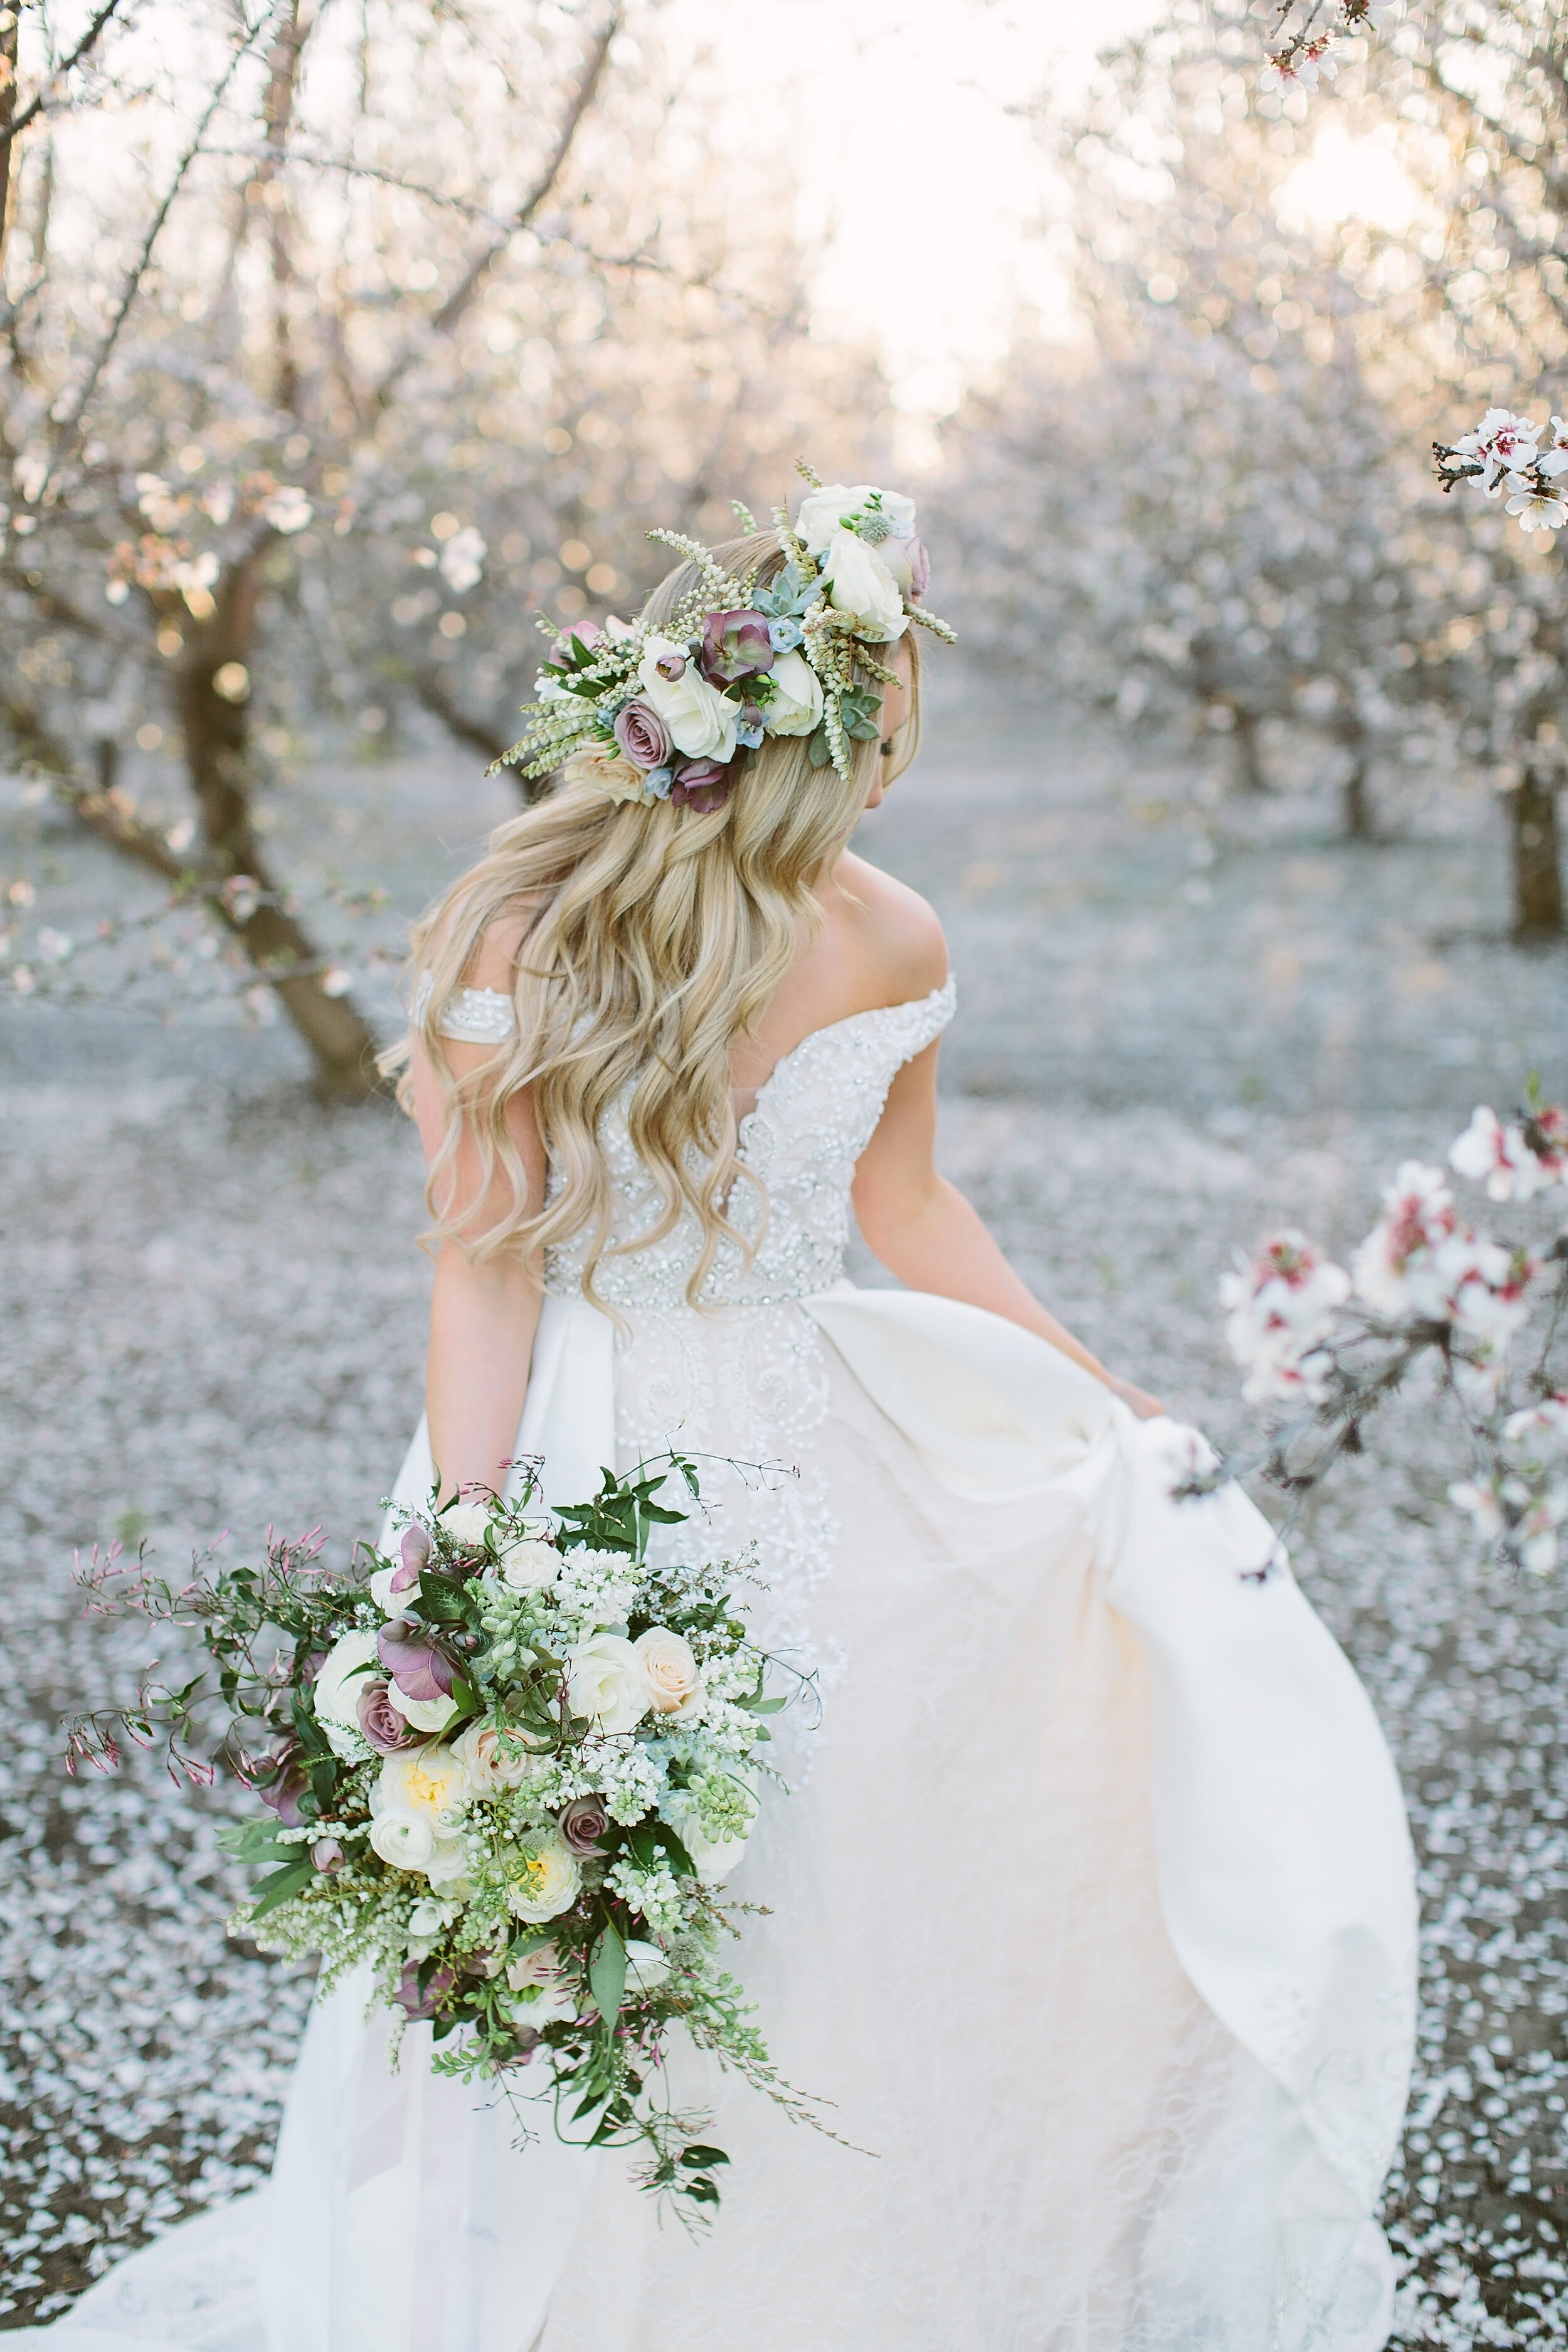 Violette-fleurs-event-design-florist-roseville-anna-perevertaylo-photography-planner-bridal-bouquet-flower-crown-rachel-allen.jpg